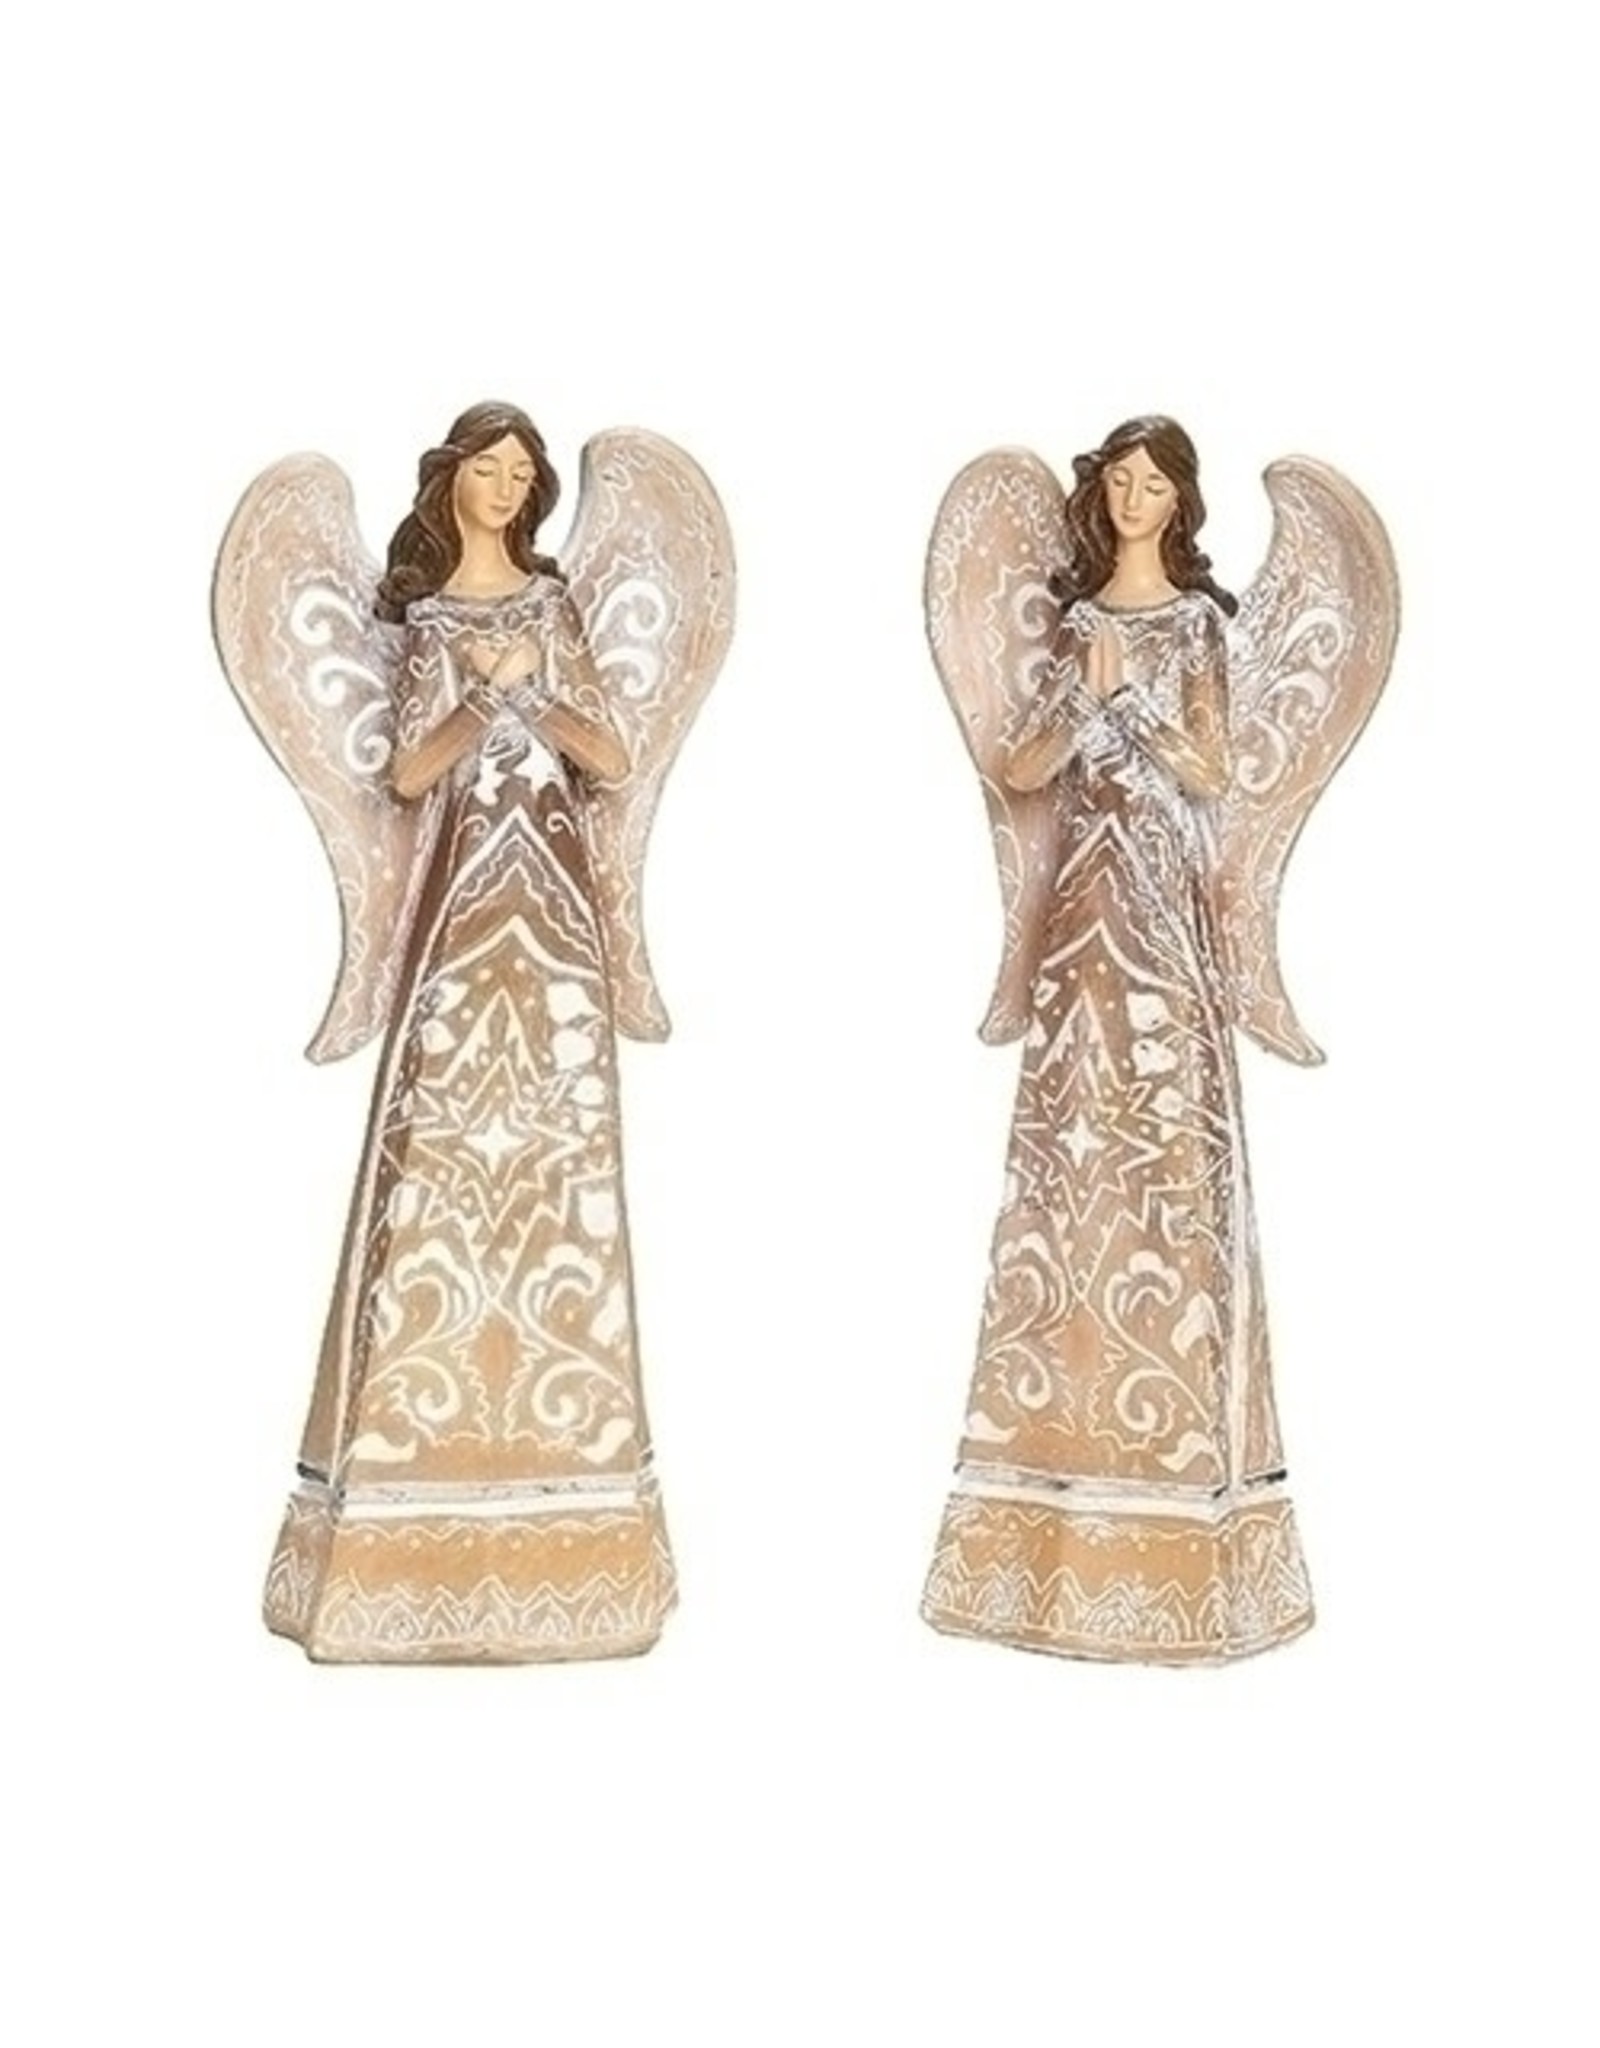 Roman Angel Figurine 9.75" High